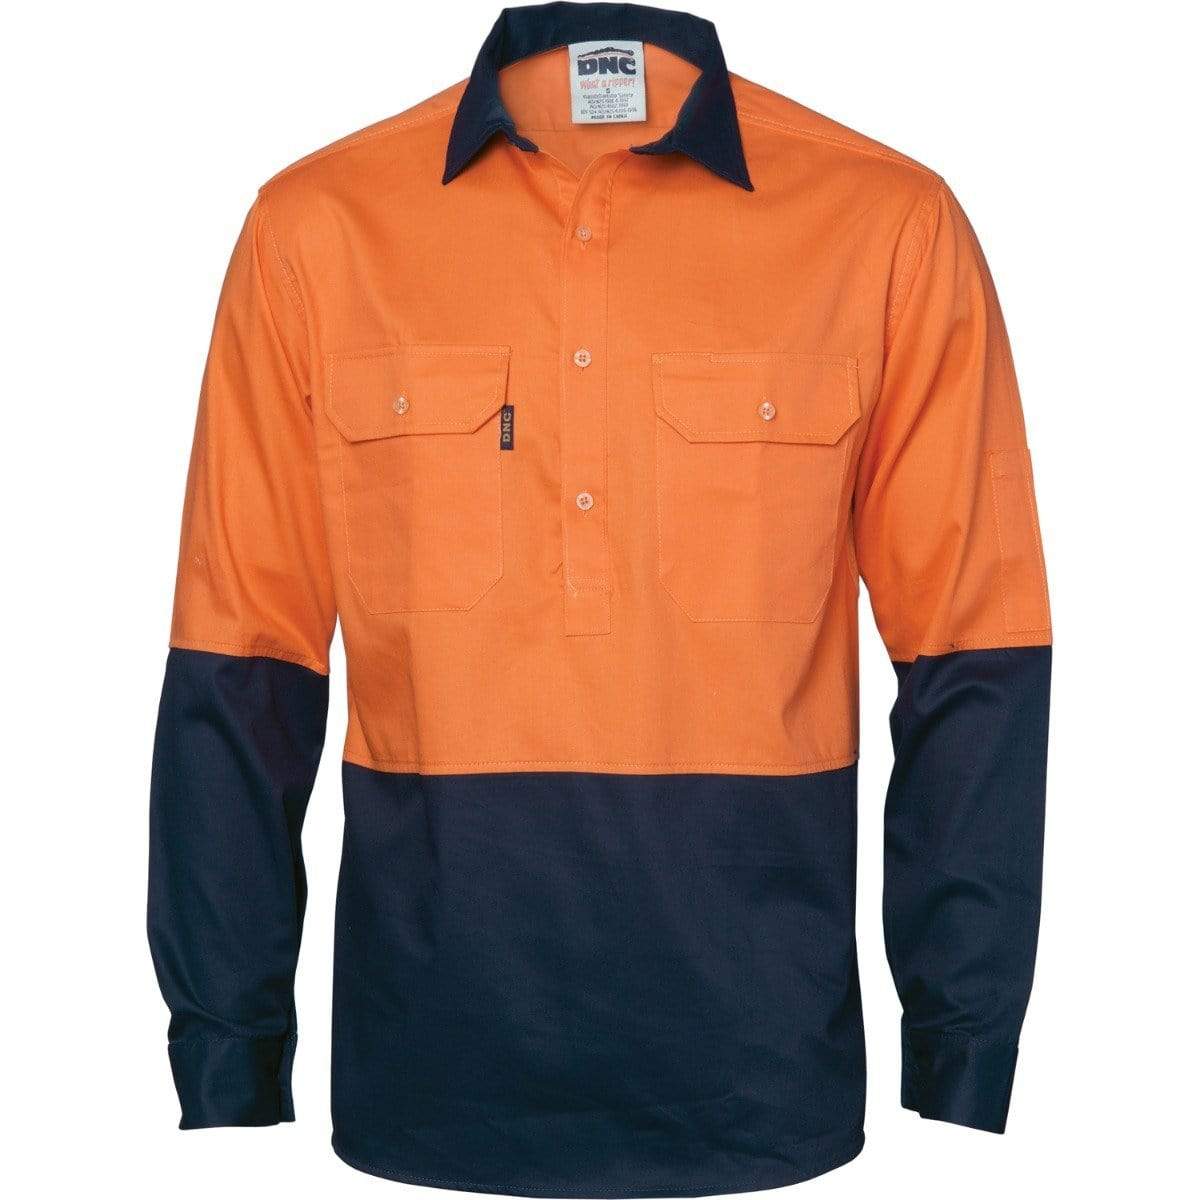 Dnc Workwear Hi-vis Two-tone Close Front Cotton Drill Long Sleeve Shirt - Gusset Sleeve - 3834 Work Wear DNC Workwear Orange/Navy 5XL 